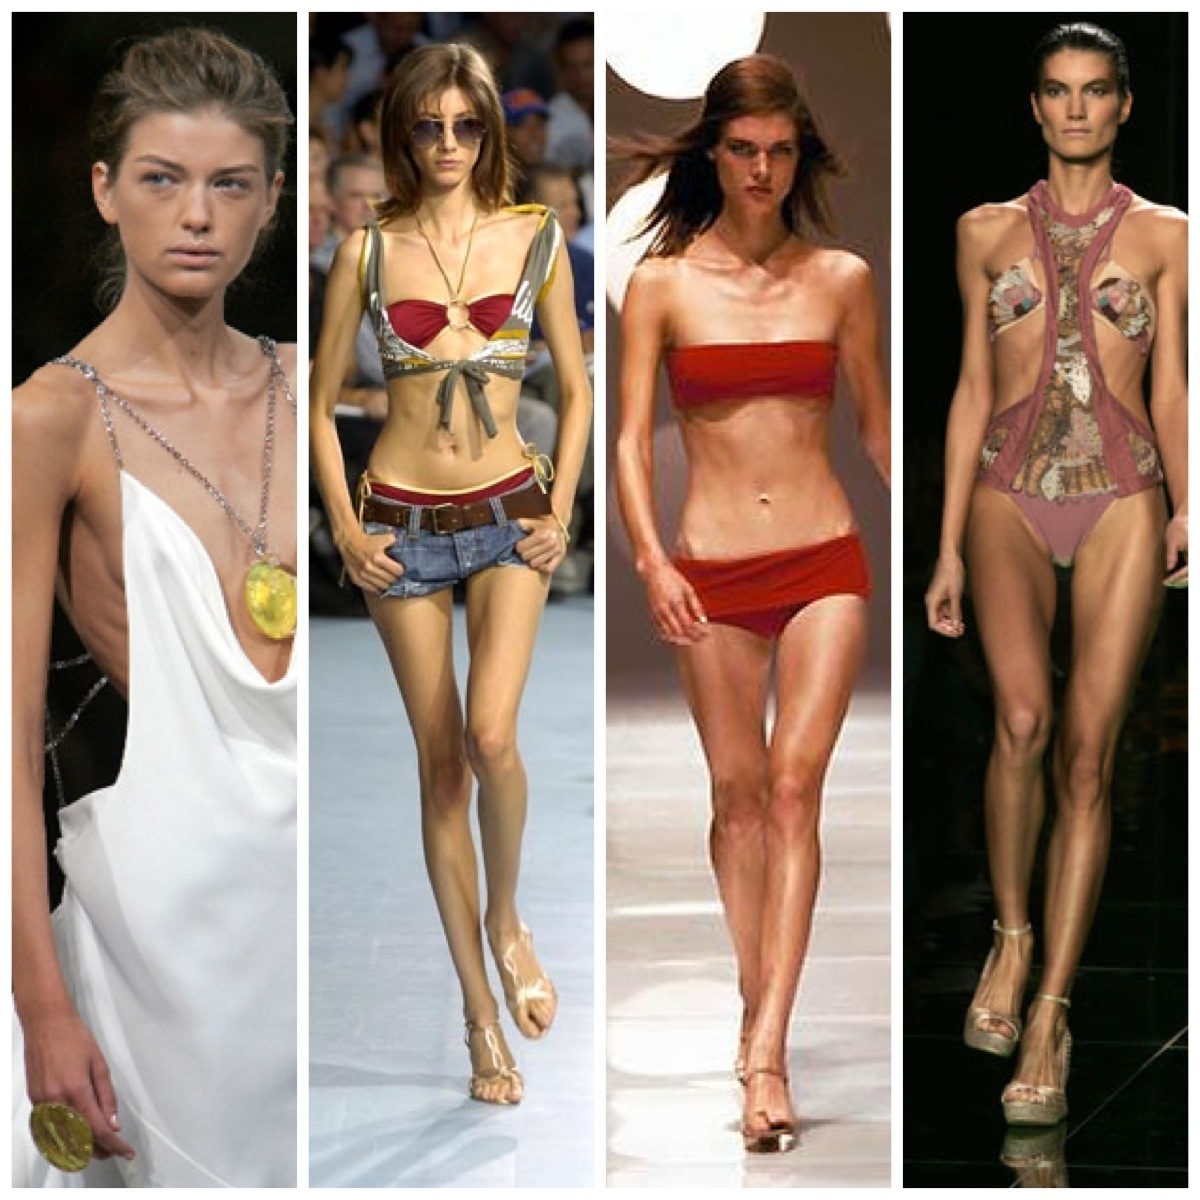 skinny-model-debate-image-courtesy-JLO-Fashion-Blog.jpg